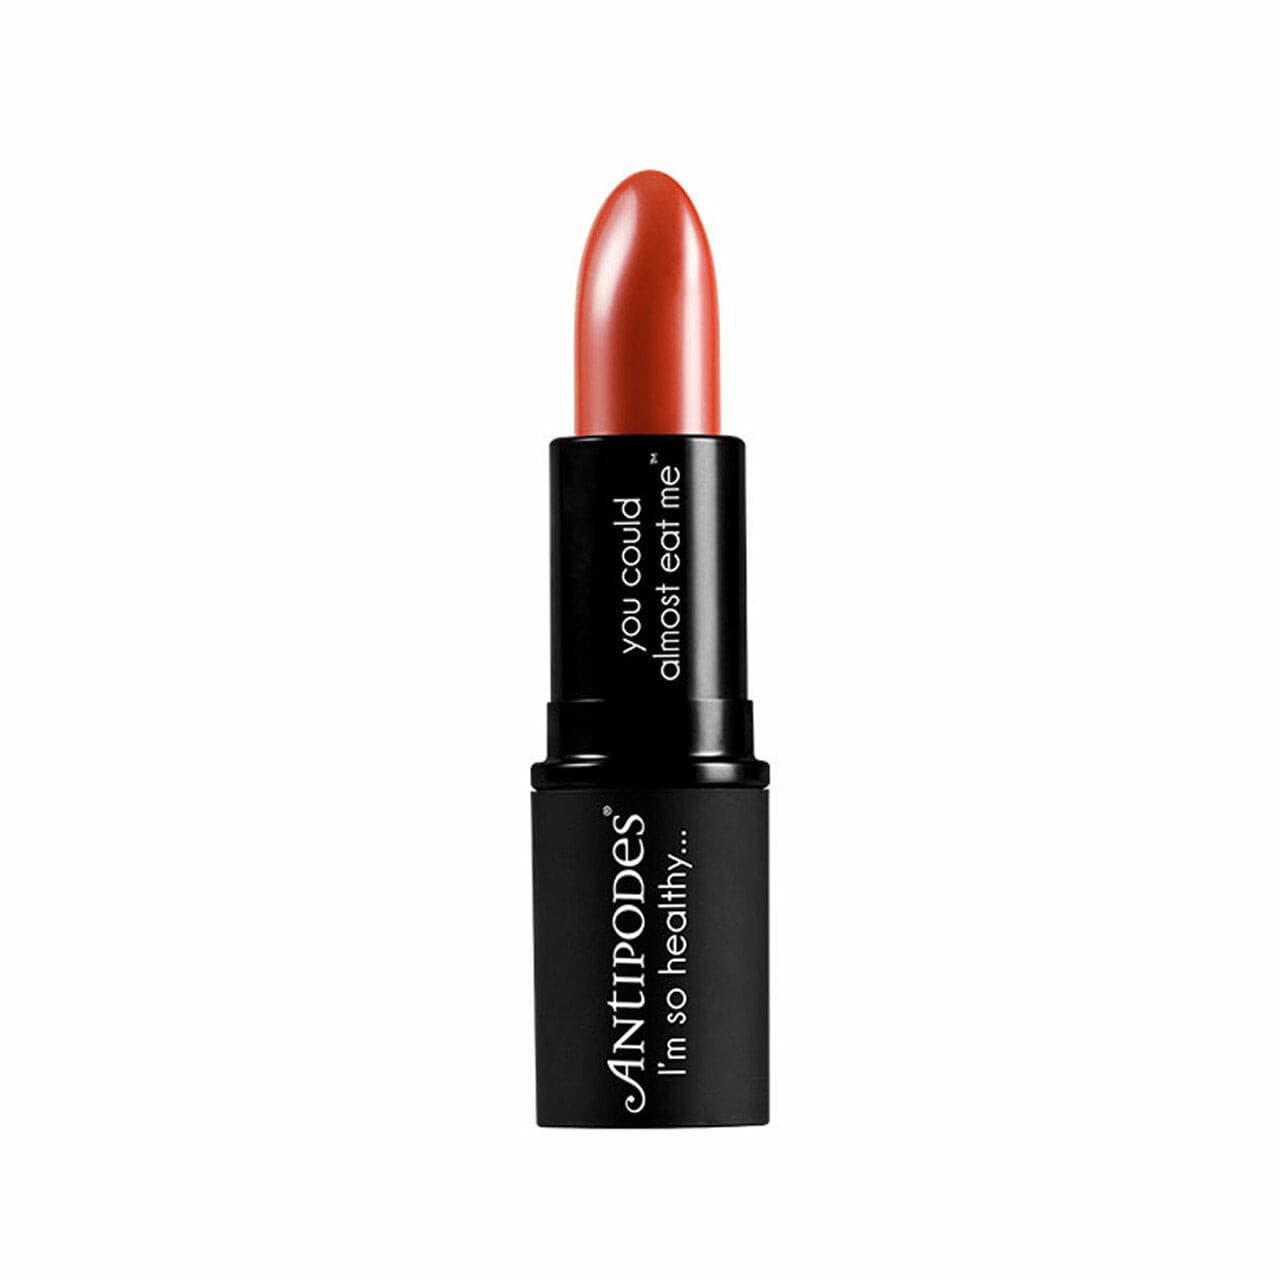 Antipodes Moisture-Boost Natural Lipstick 4g - Boom Rock Bronze.